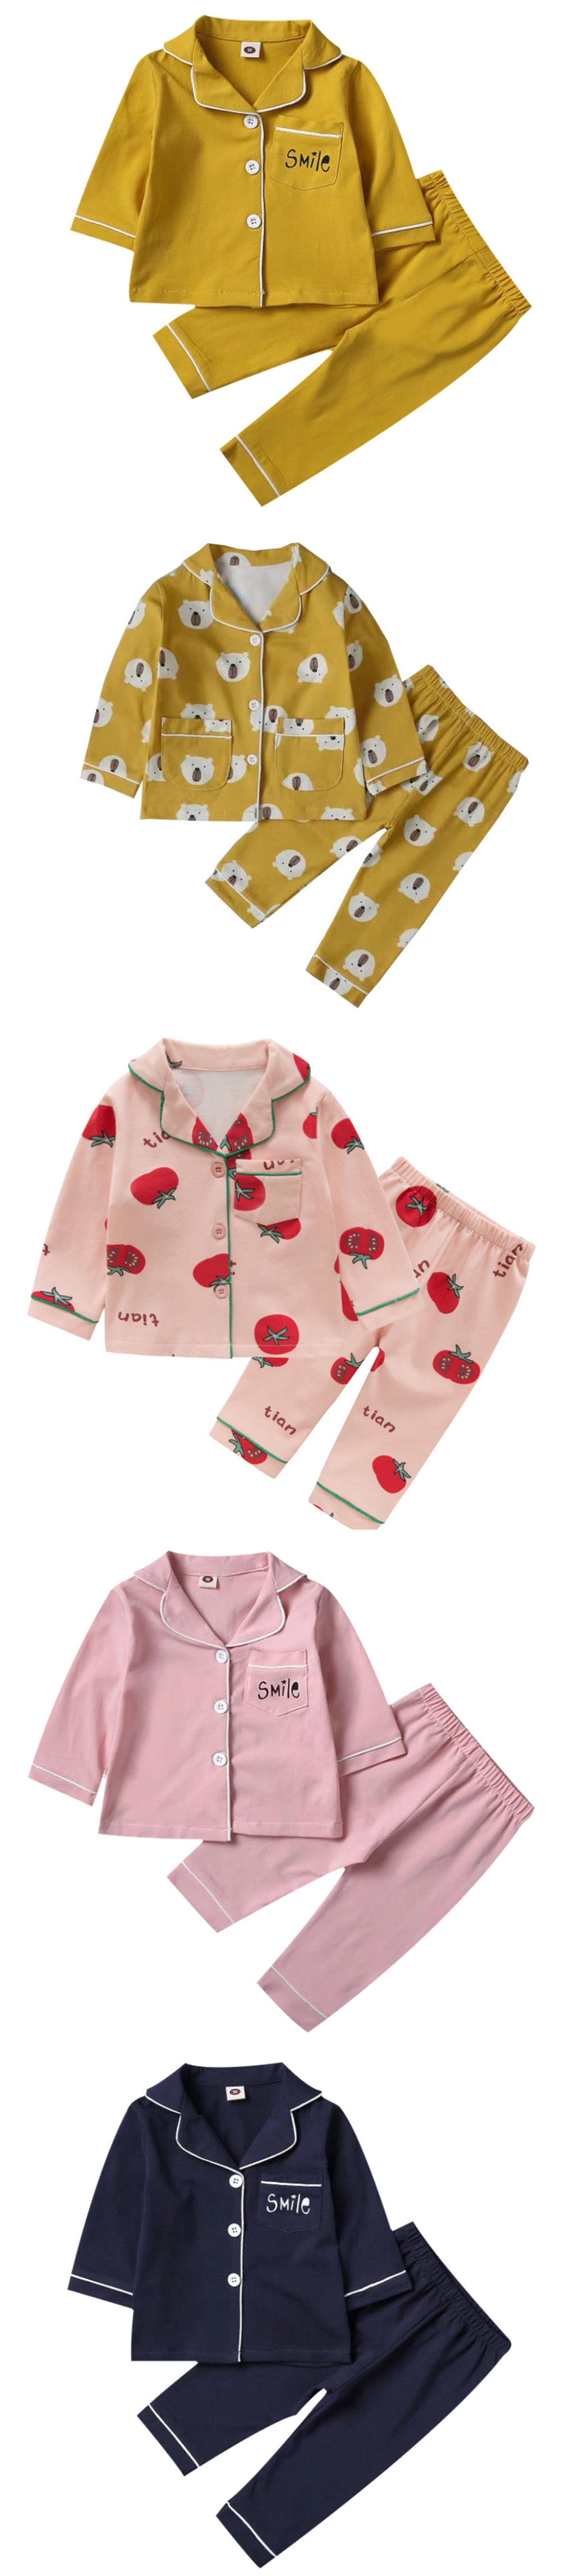 Kid′s Cotton Pyjama Set Sleepwear